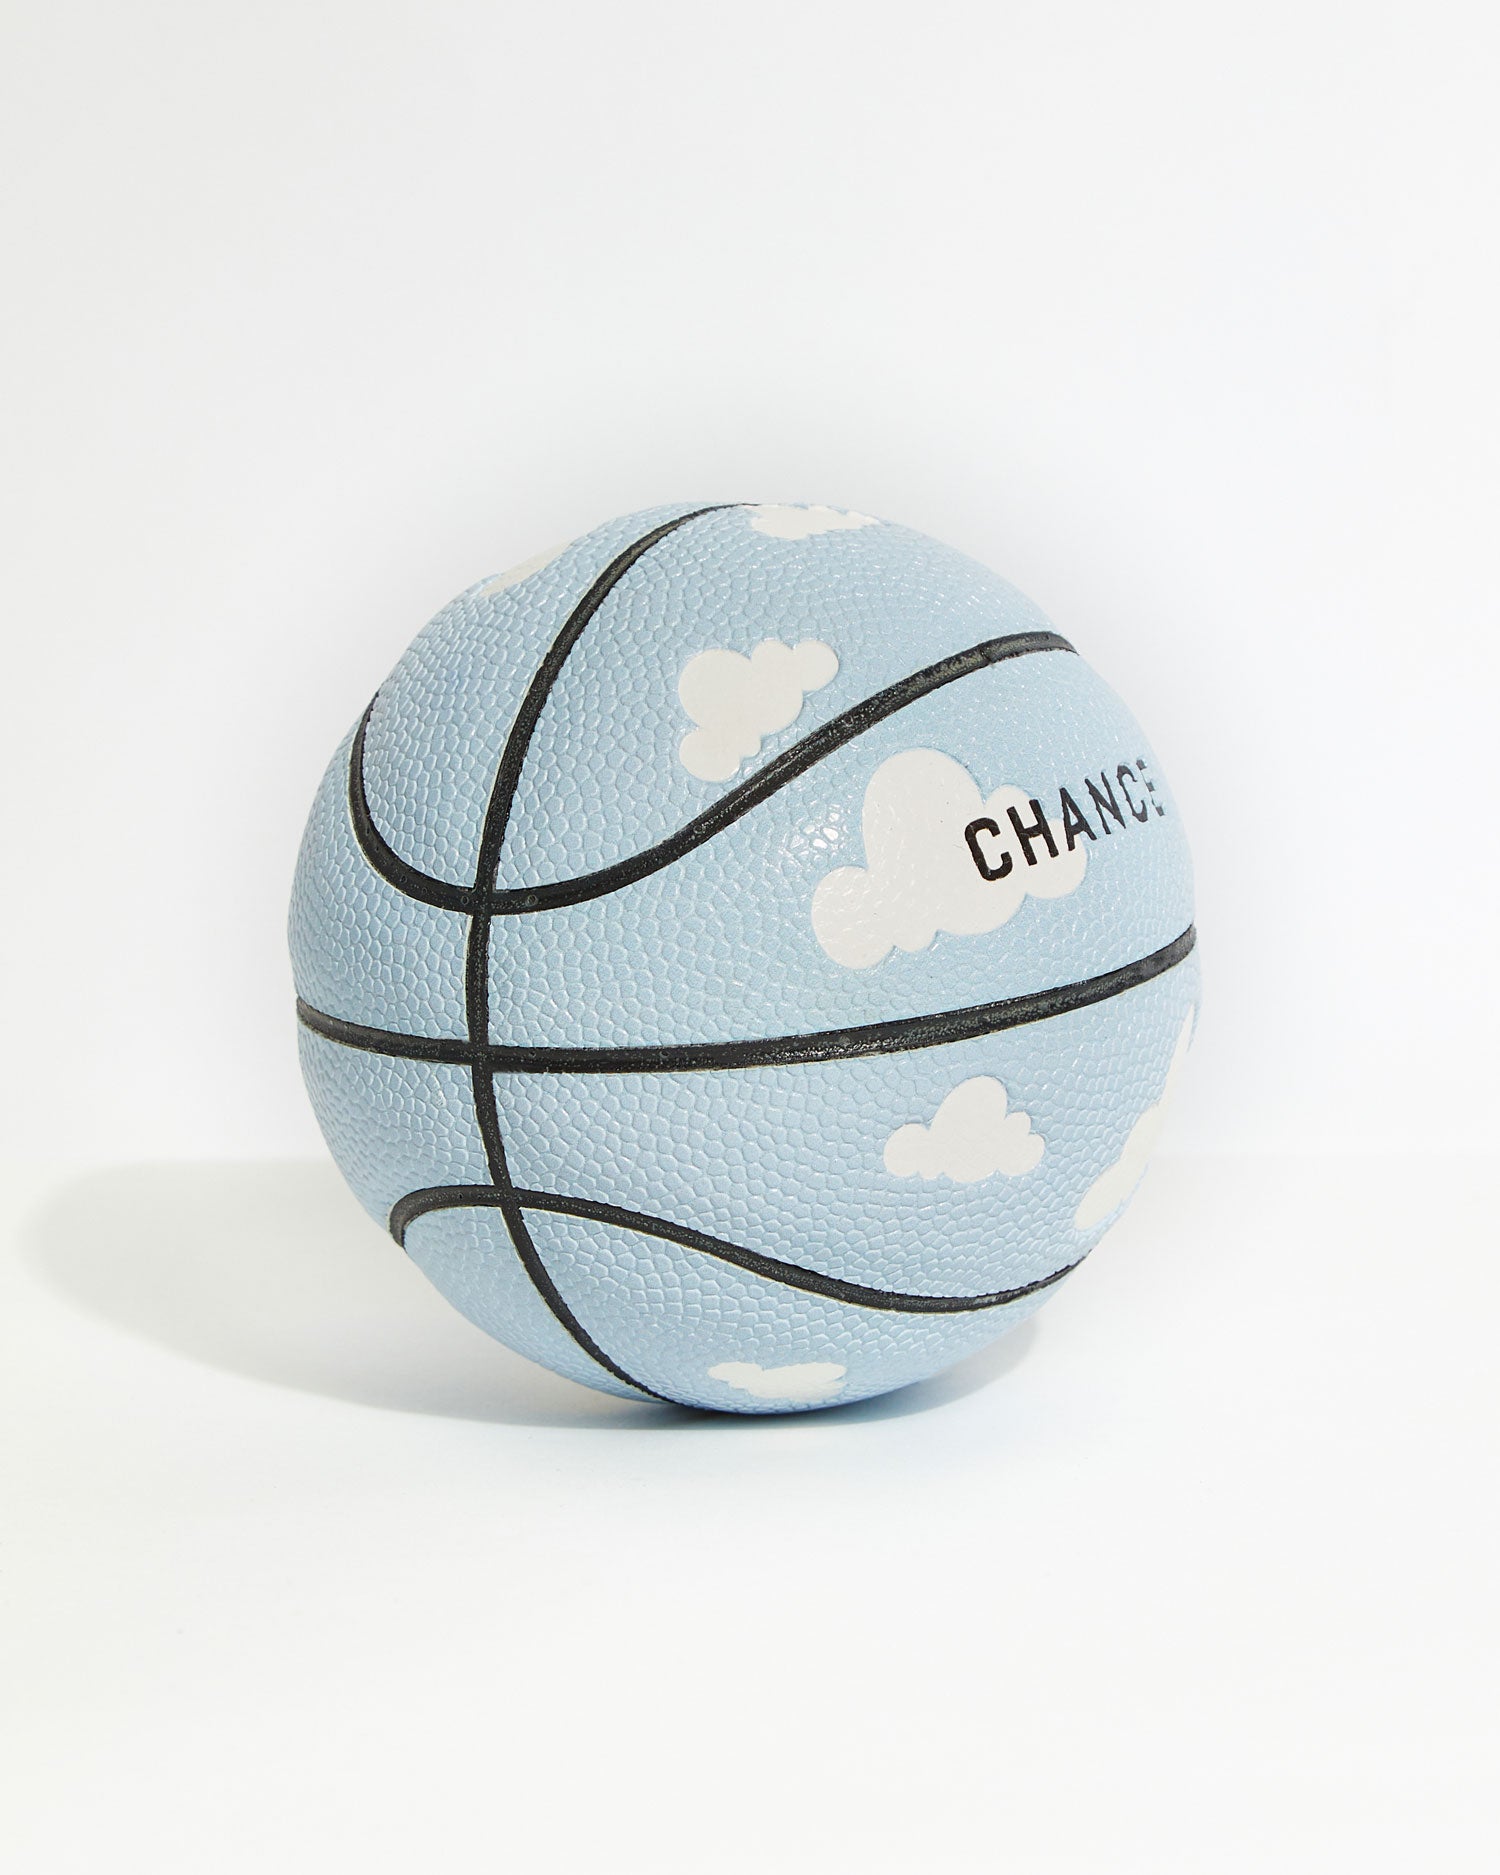 FLOAT Mini Composite Leather Basketball